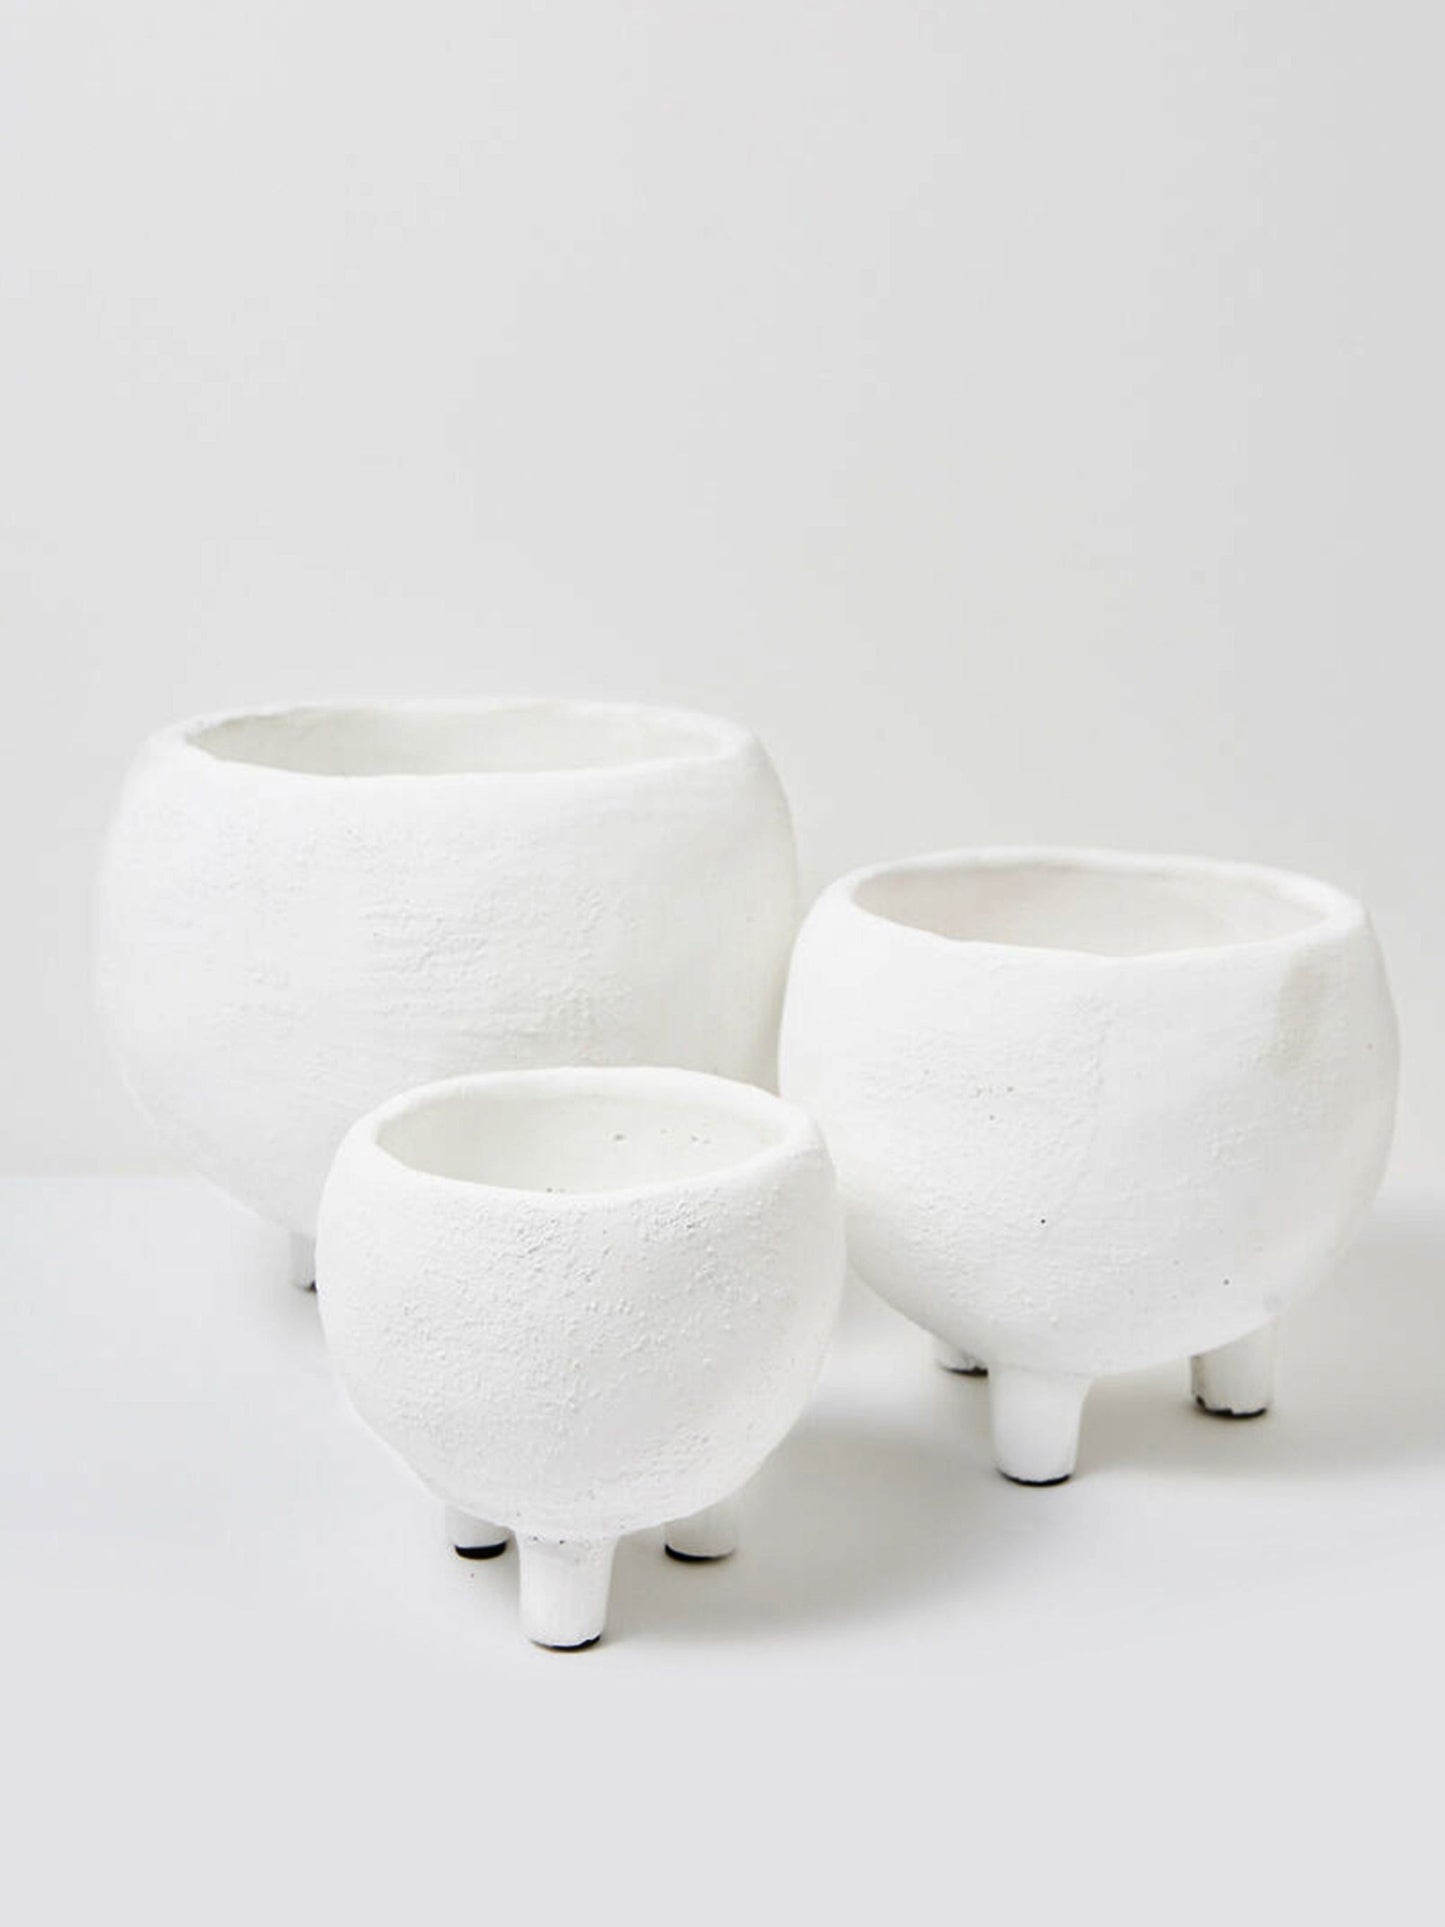 Niro Short White Dome Pot with Standing Legs – Medium Set